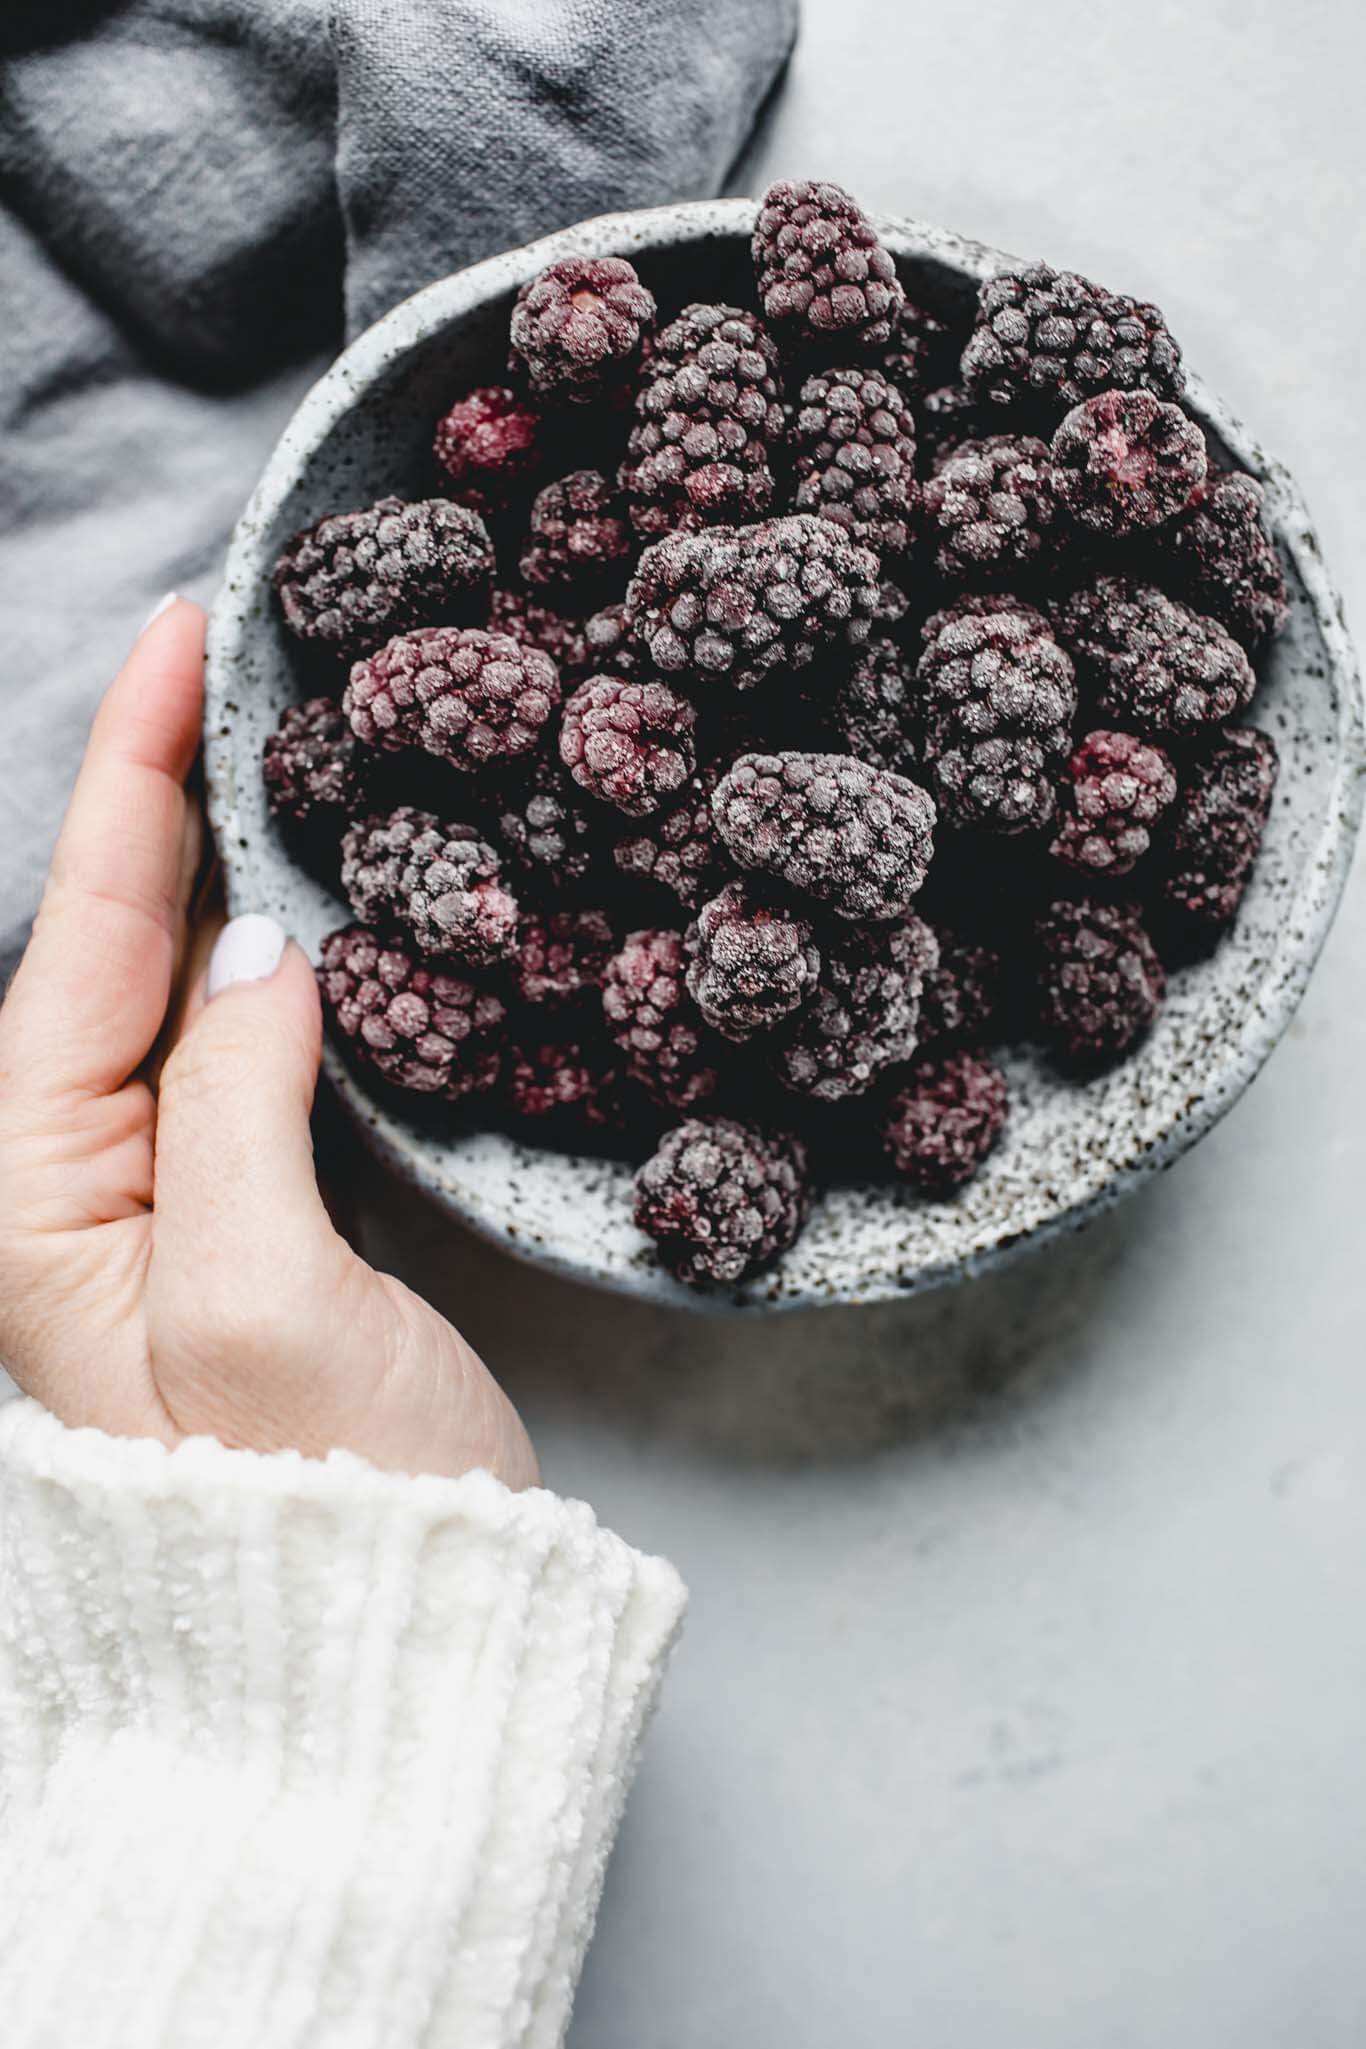 Hand holding bowl of frozen blackberries.